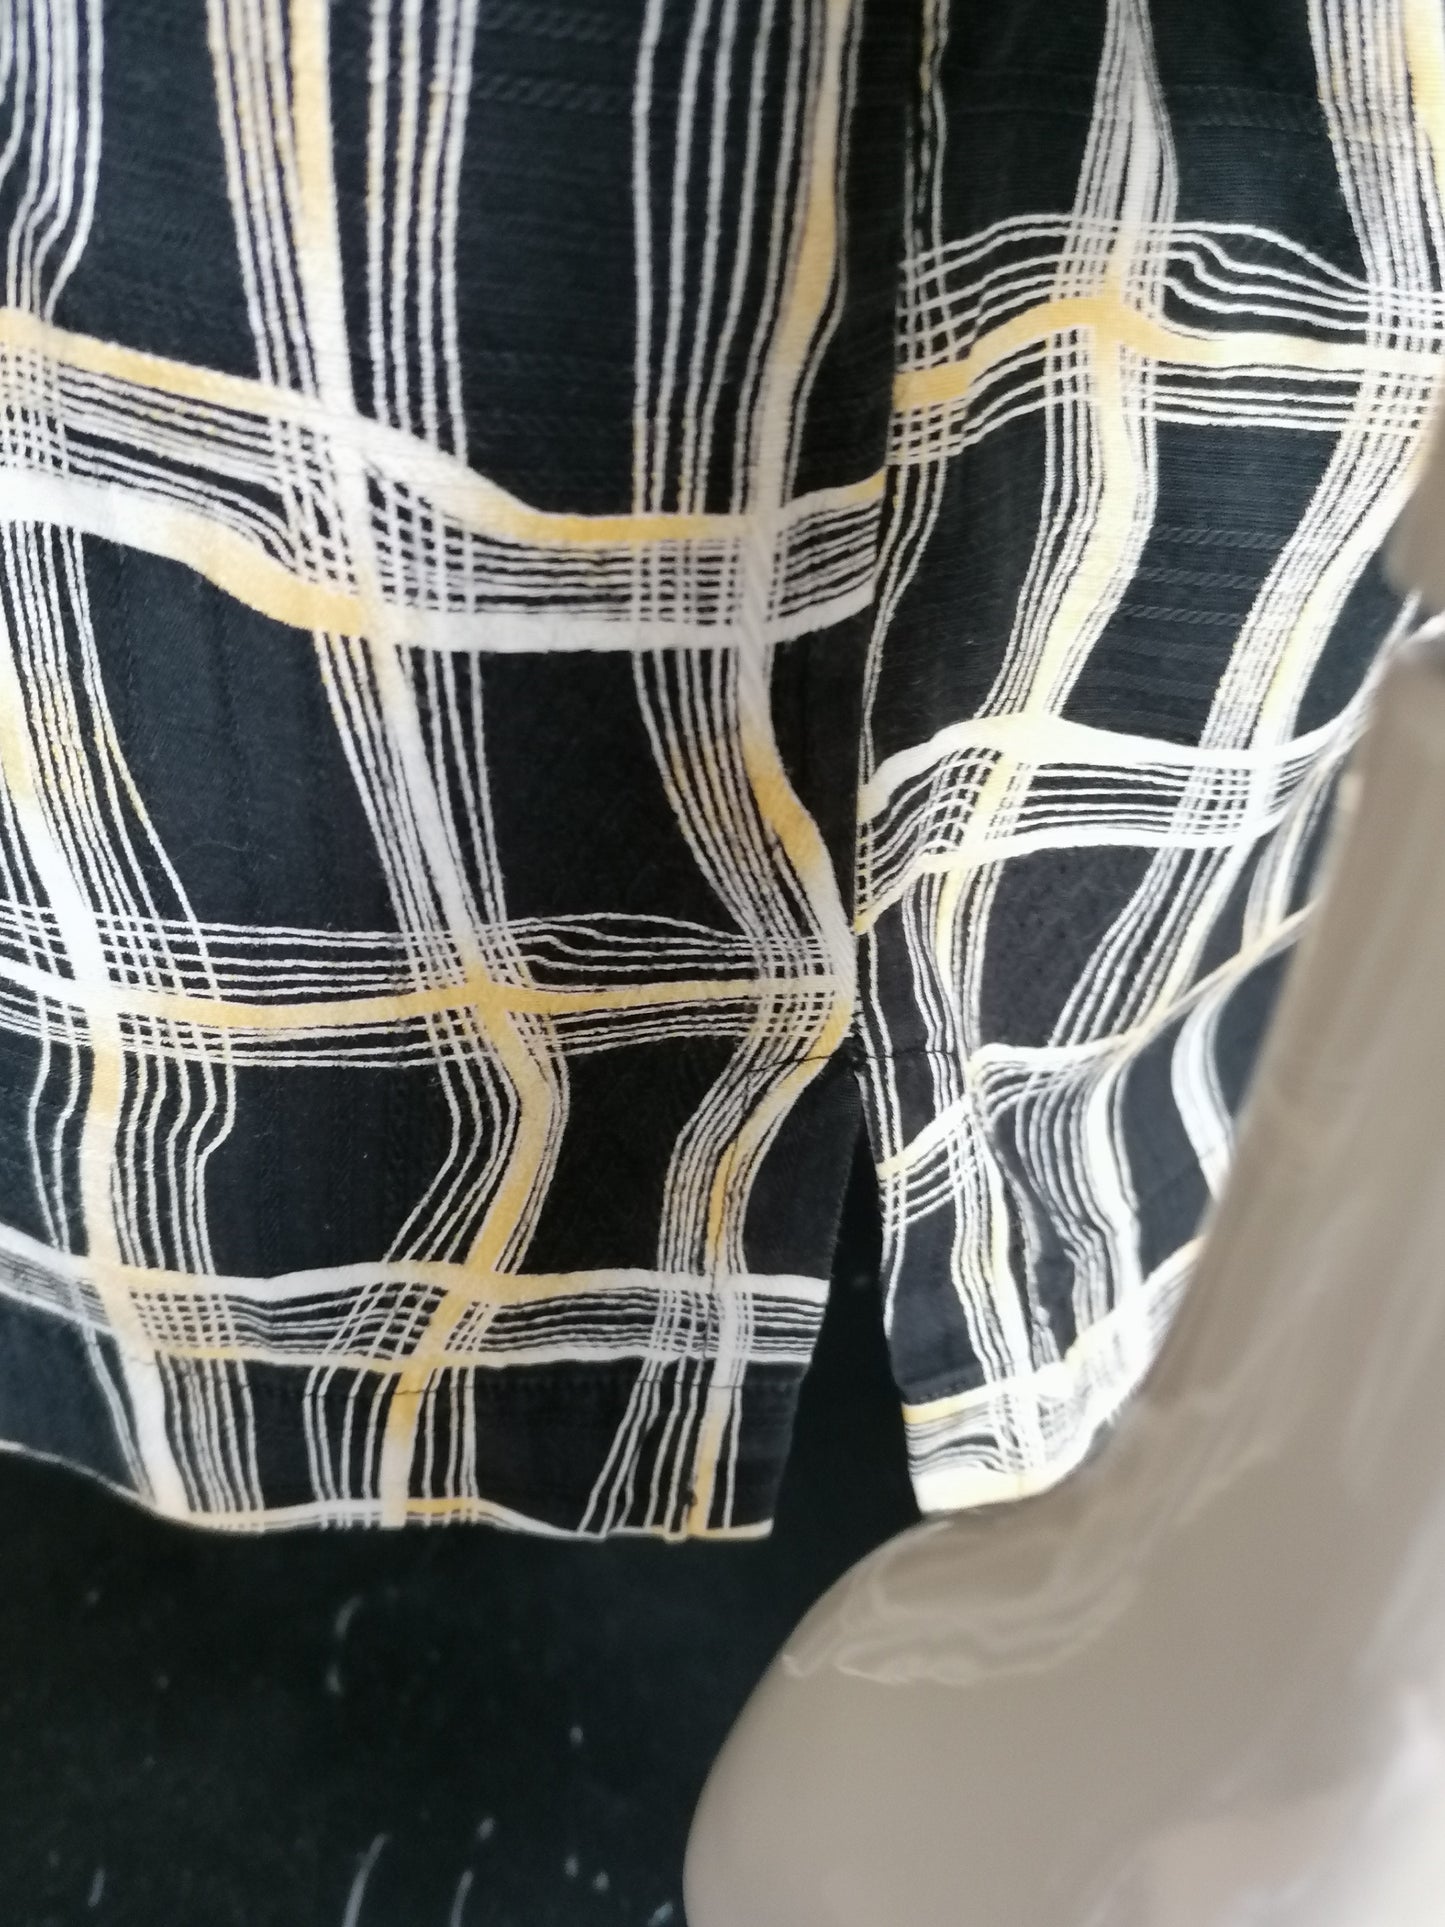 Signum Vintage Shirt Short Sleeve. Impression en jaune noir. Taille xxl / 2xl.